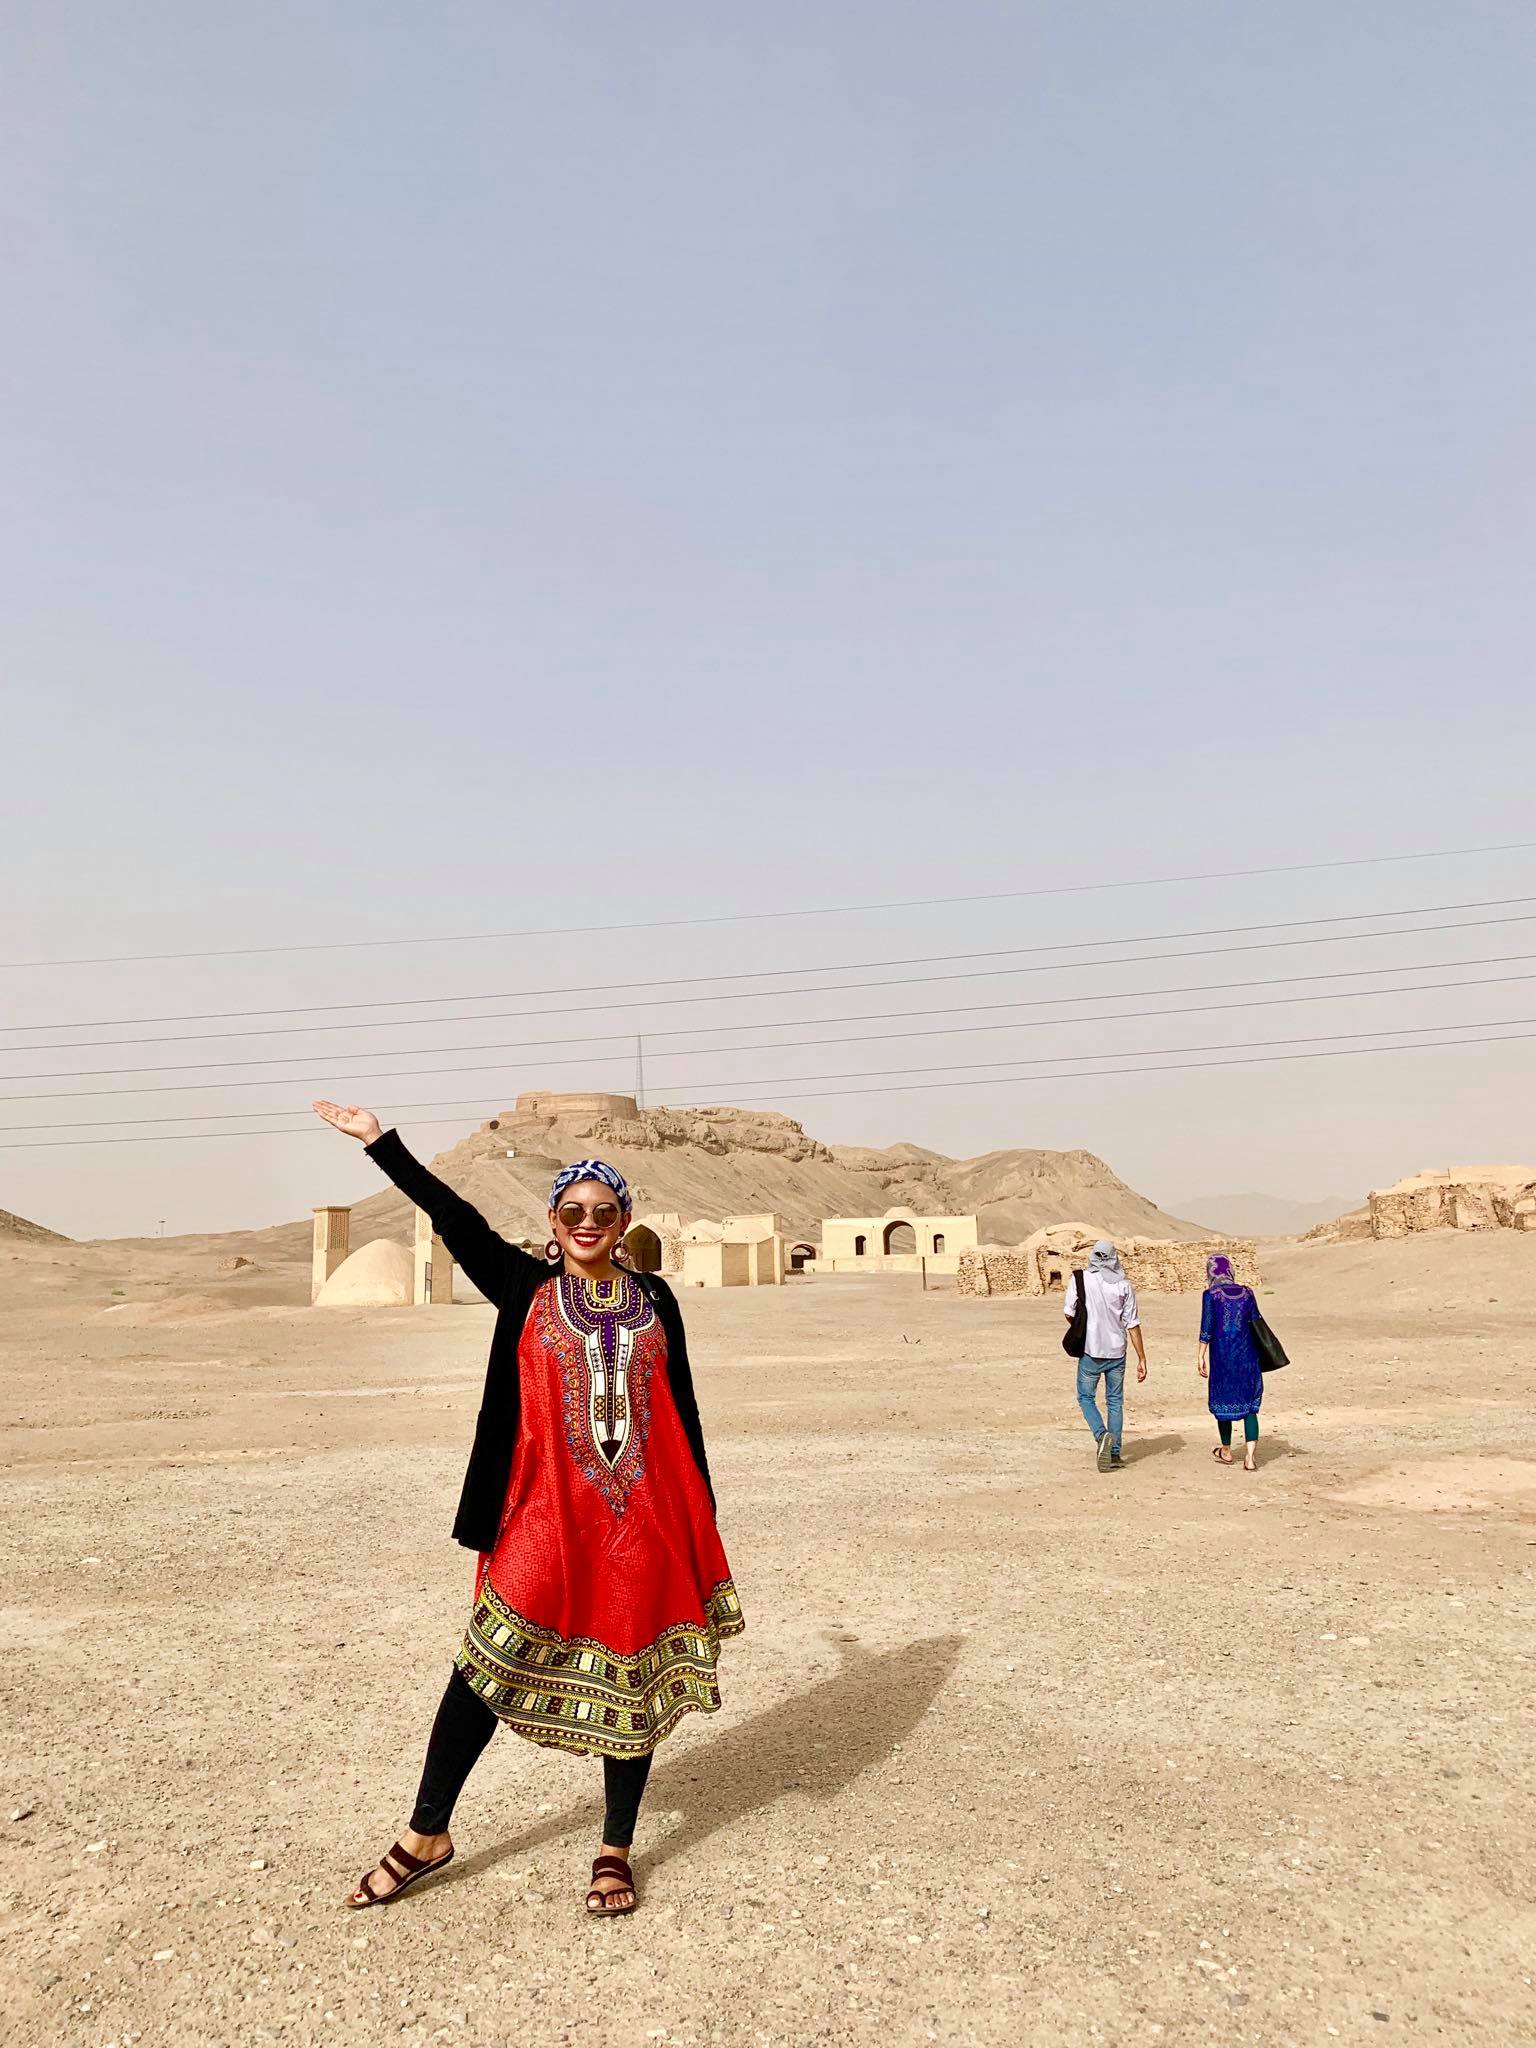 Kach Solo Travels in 2019 YAZD - the desert city in Iran3.jpg